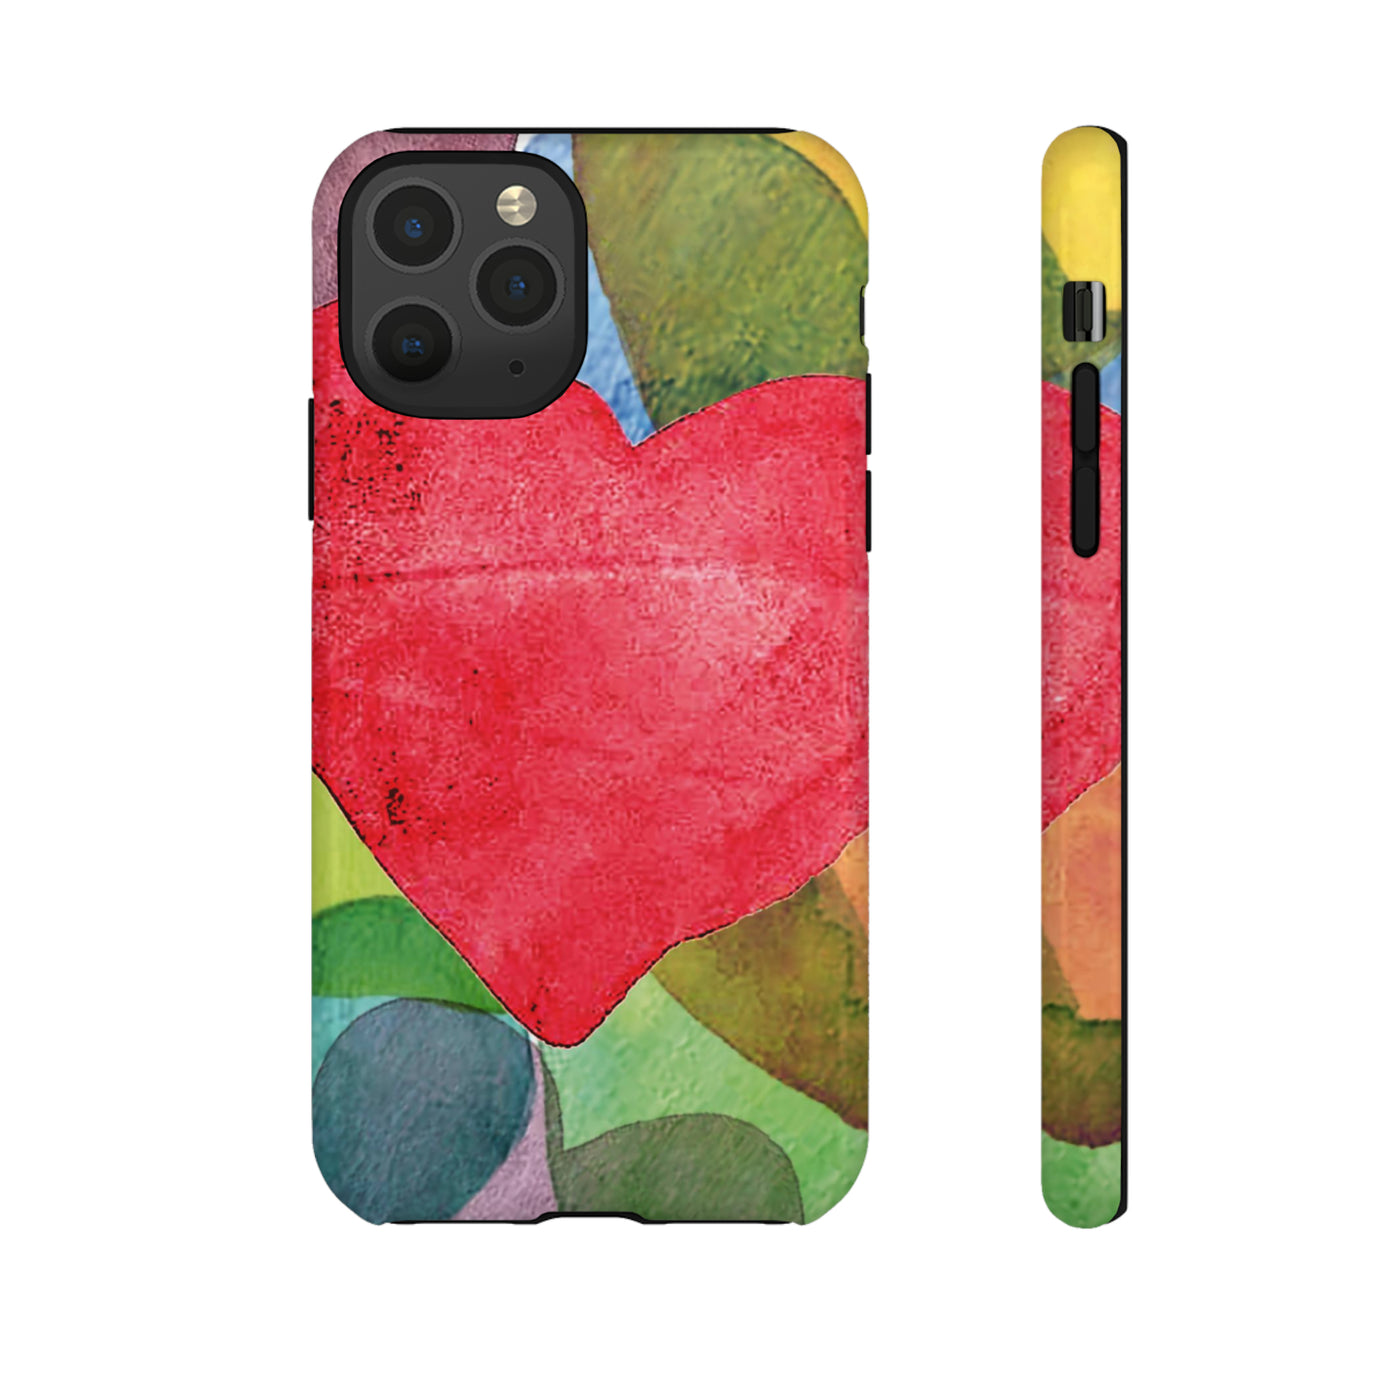 Cute IPhone Case | iPhone 15 Case | iPhone 15 Pro Max Case, Iphone 14 Case, Iphone 14 Pro Max Case IPhone Case for Art Lovers, Red Heart